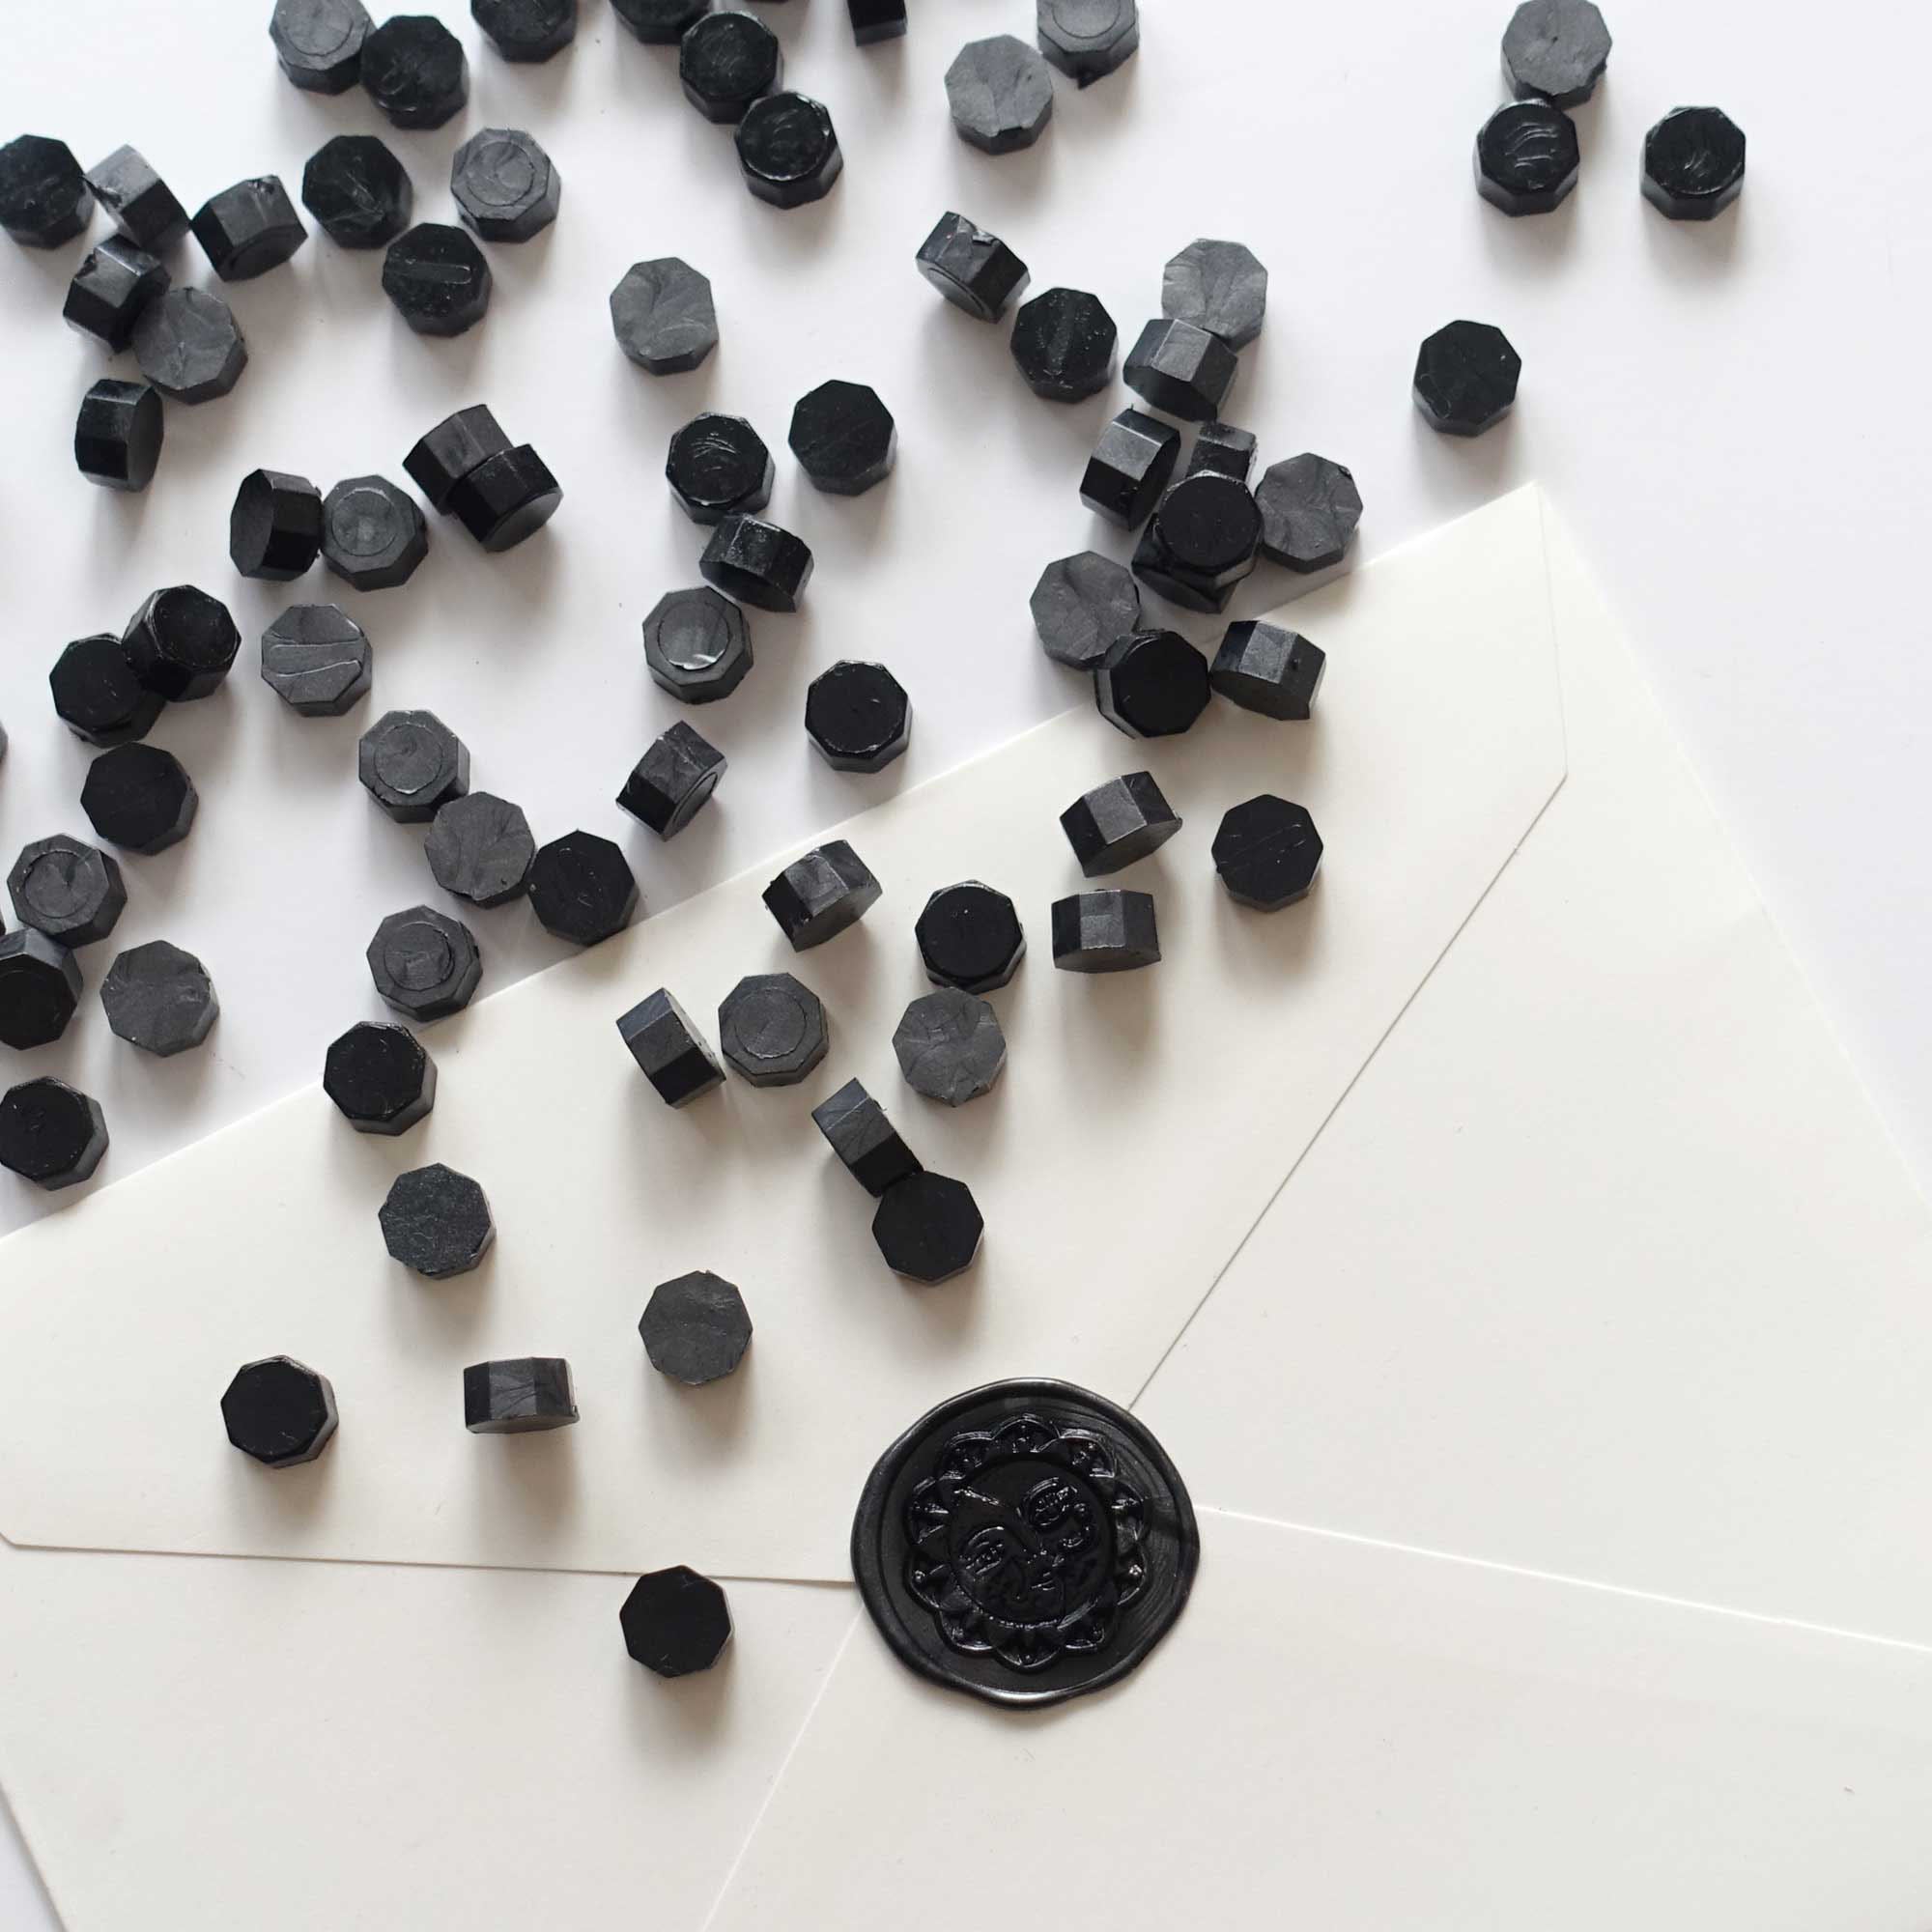 Mixed black sealing wax seal beads pellets Melbourne Sydney Australia envelopes